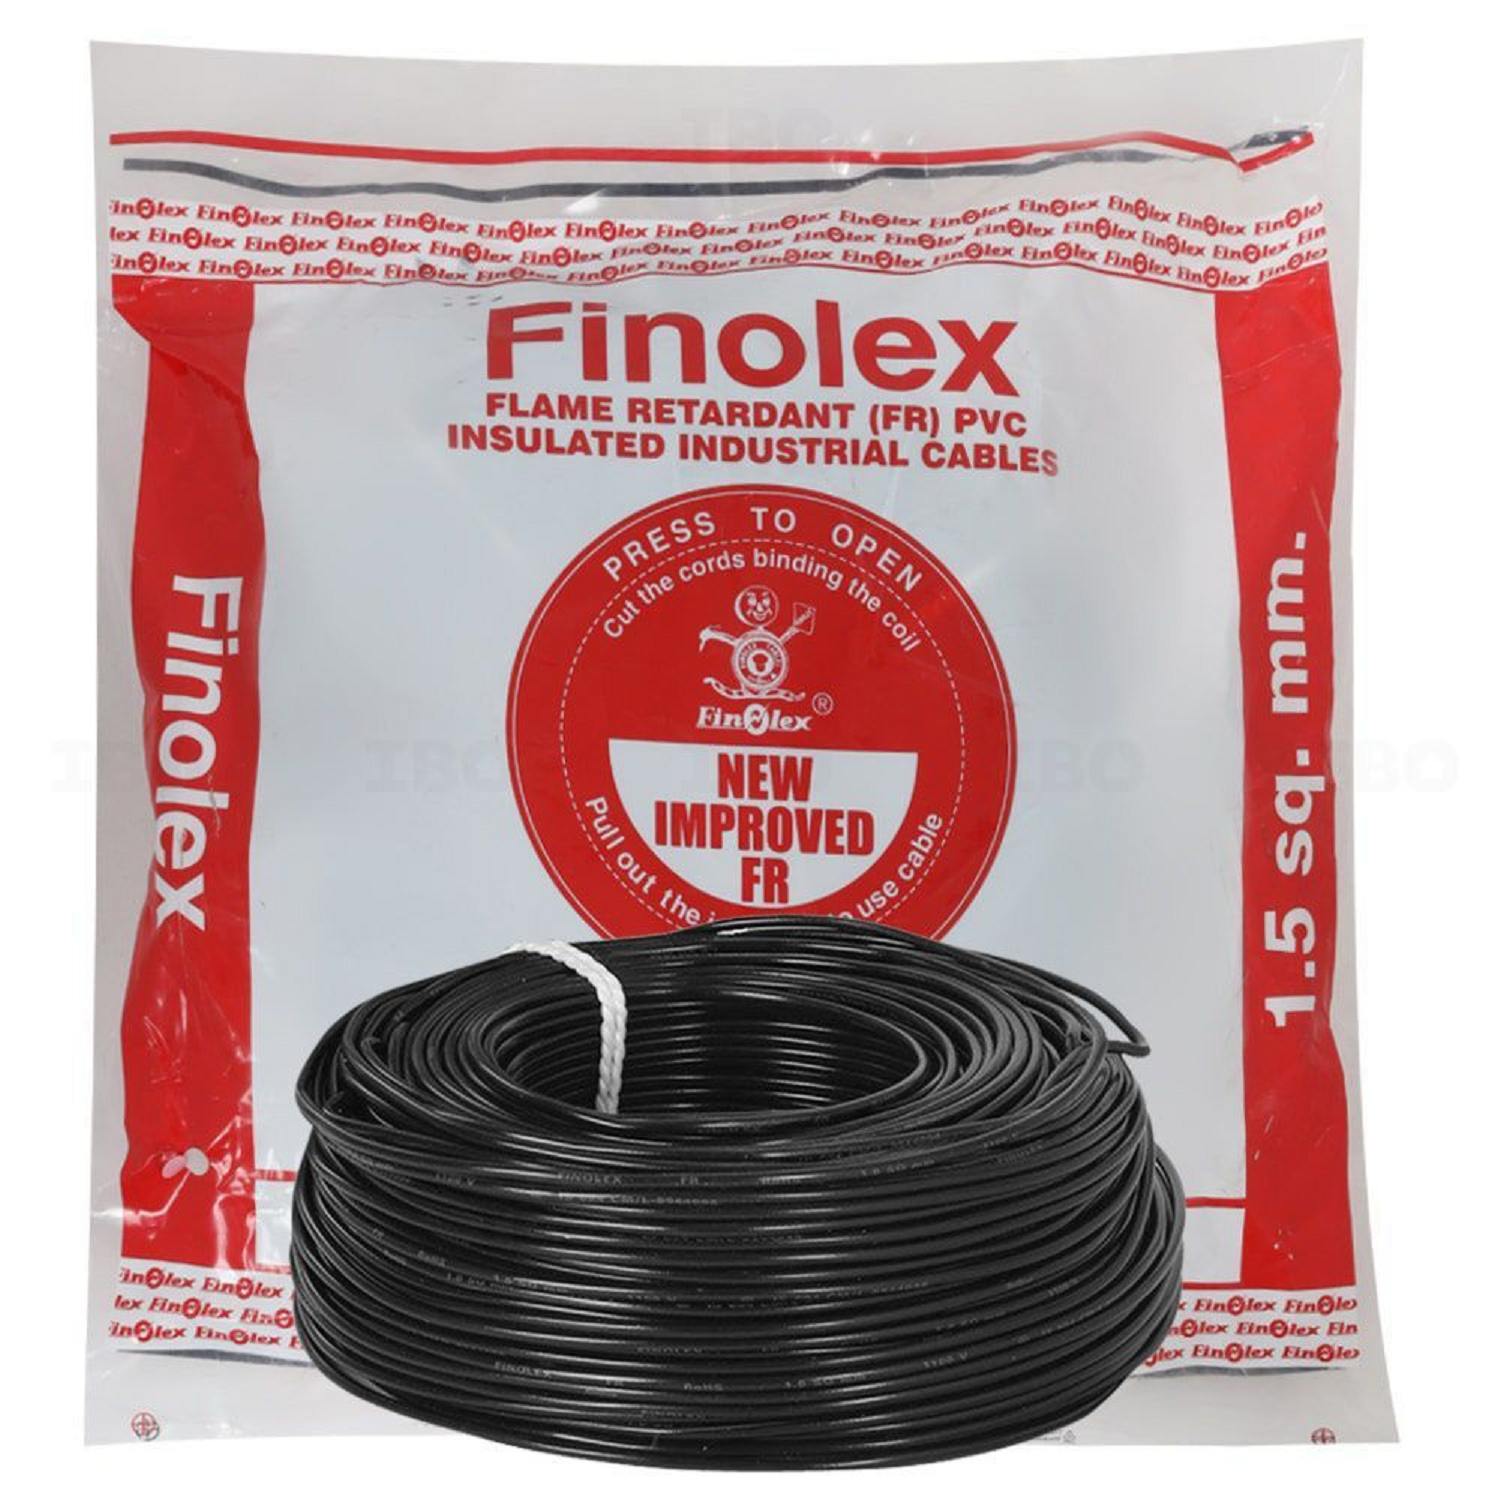 1.5 Sqmm Finolex FR Single Core Copper Wire (180 Mtr) With PVC Insulated for Domestic 38 Industrial 